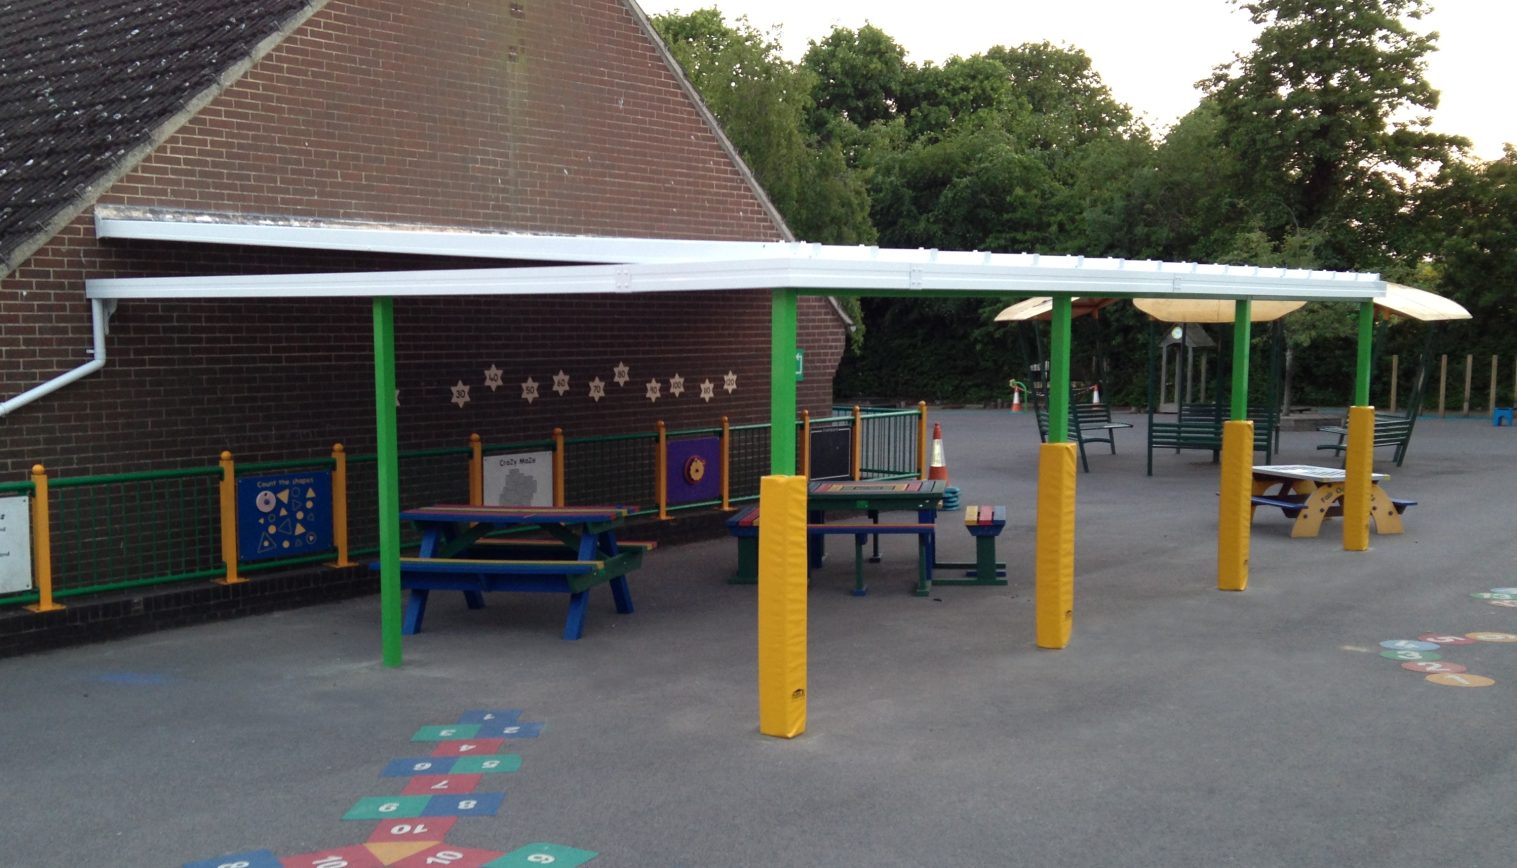 Fair Oak Infant School – Second Installation